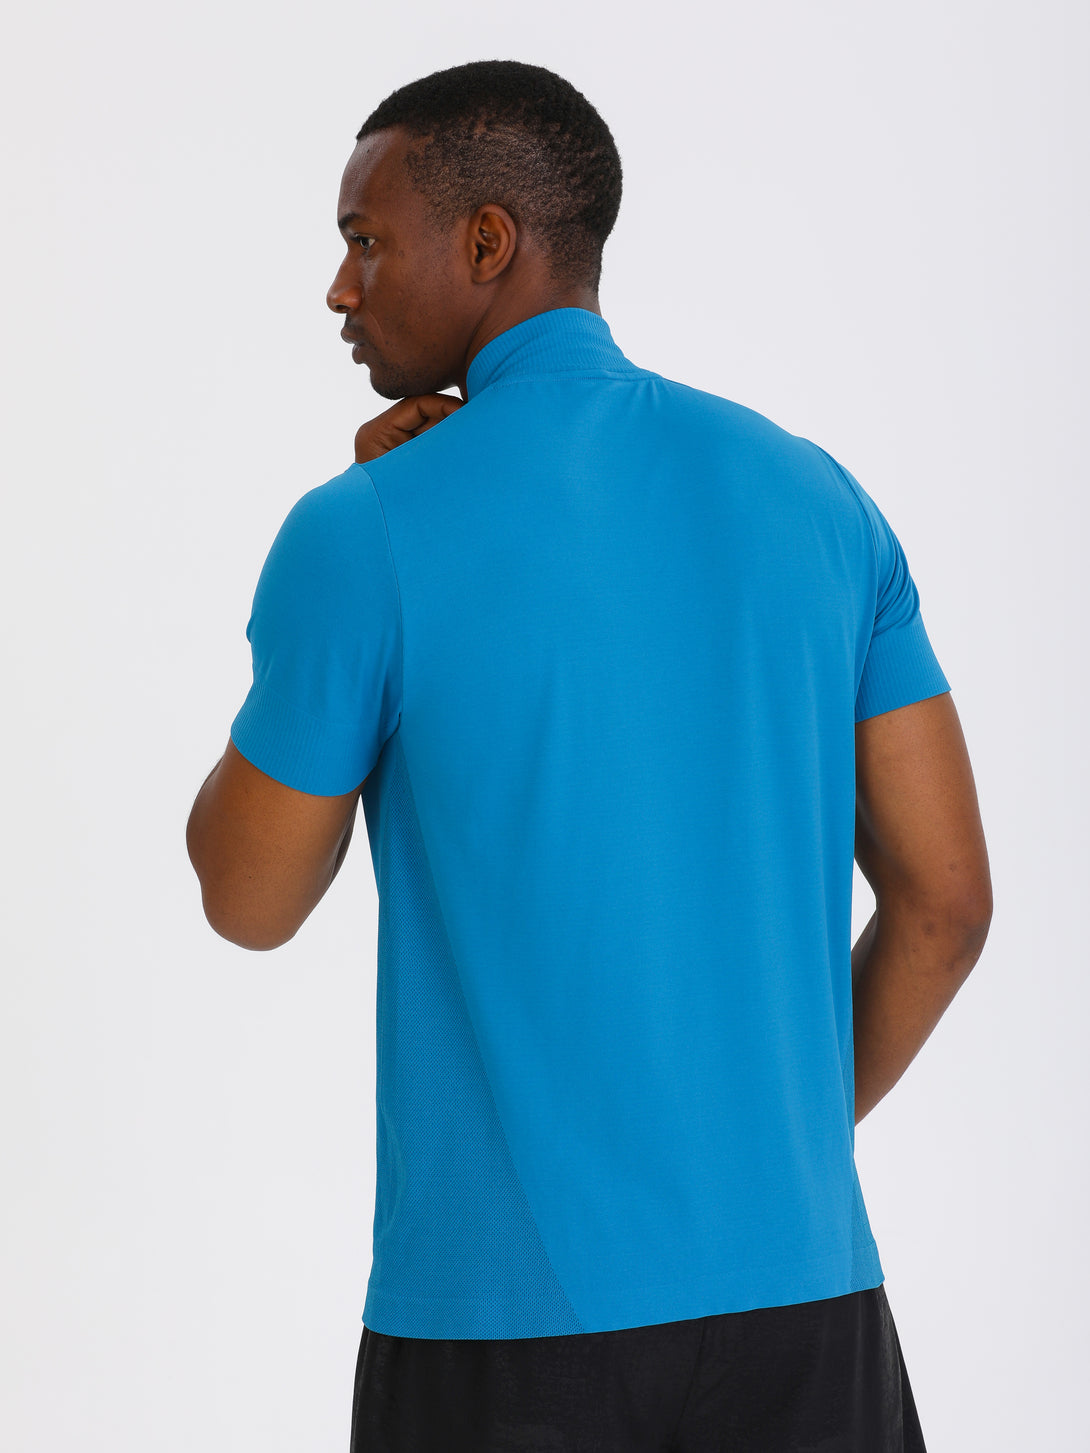 A Man Wearing Saxony Blue Color Seamless Short Sleeve Zipped T-Shirt